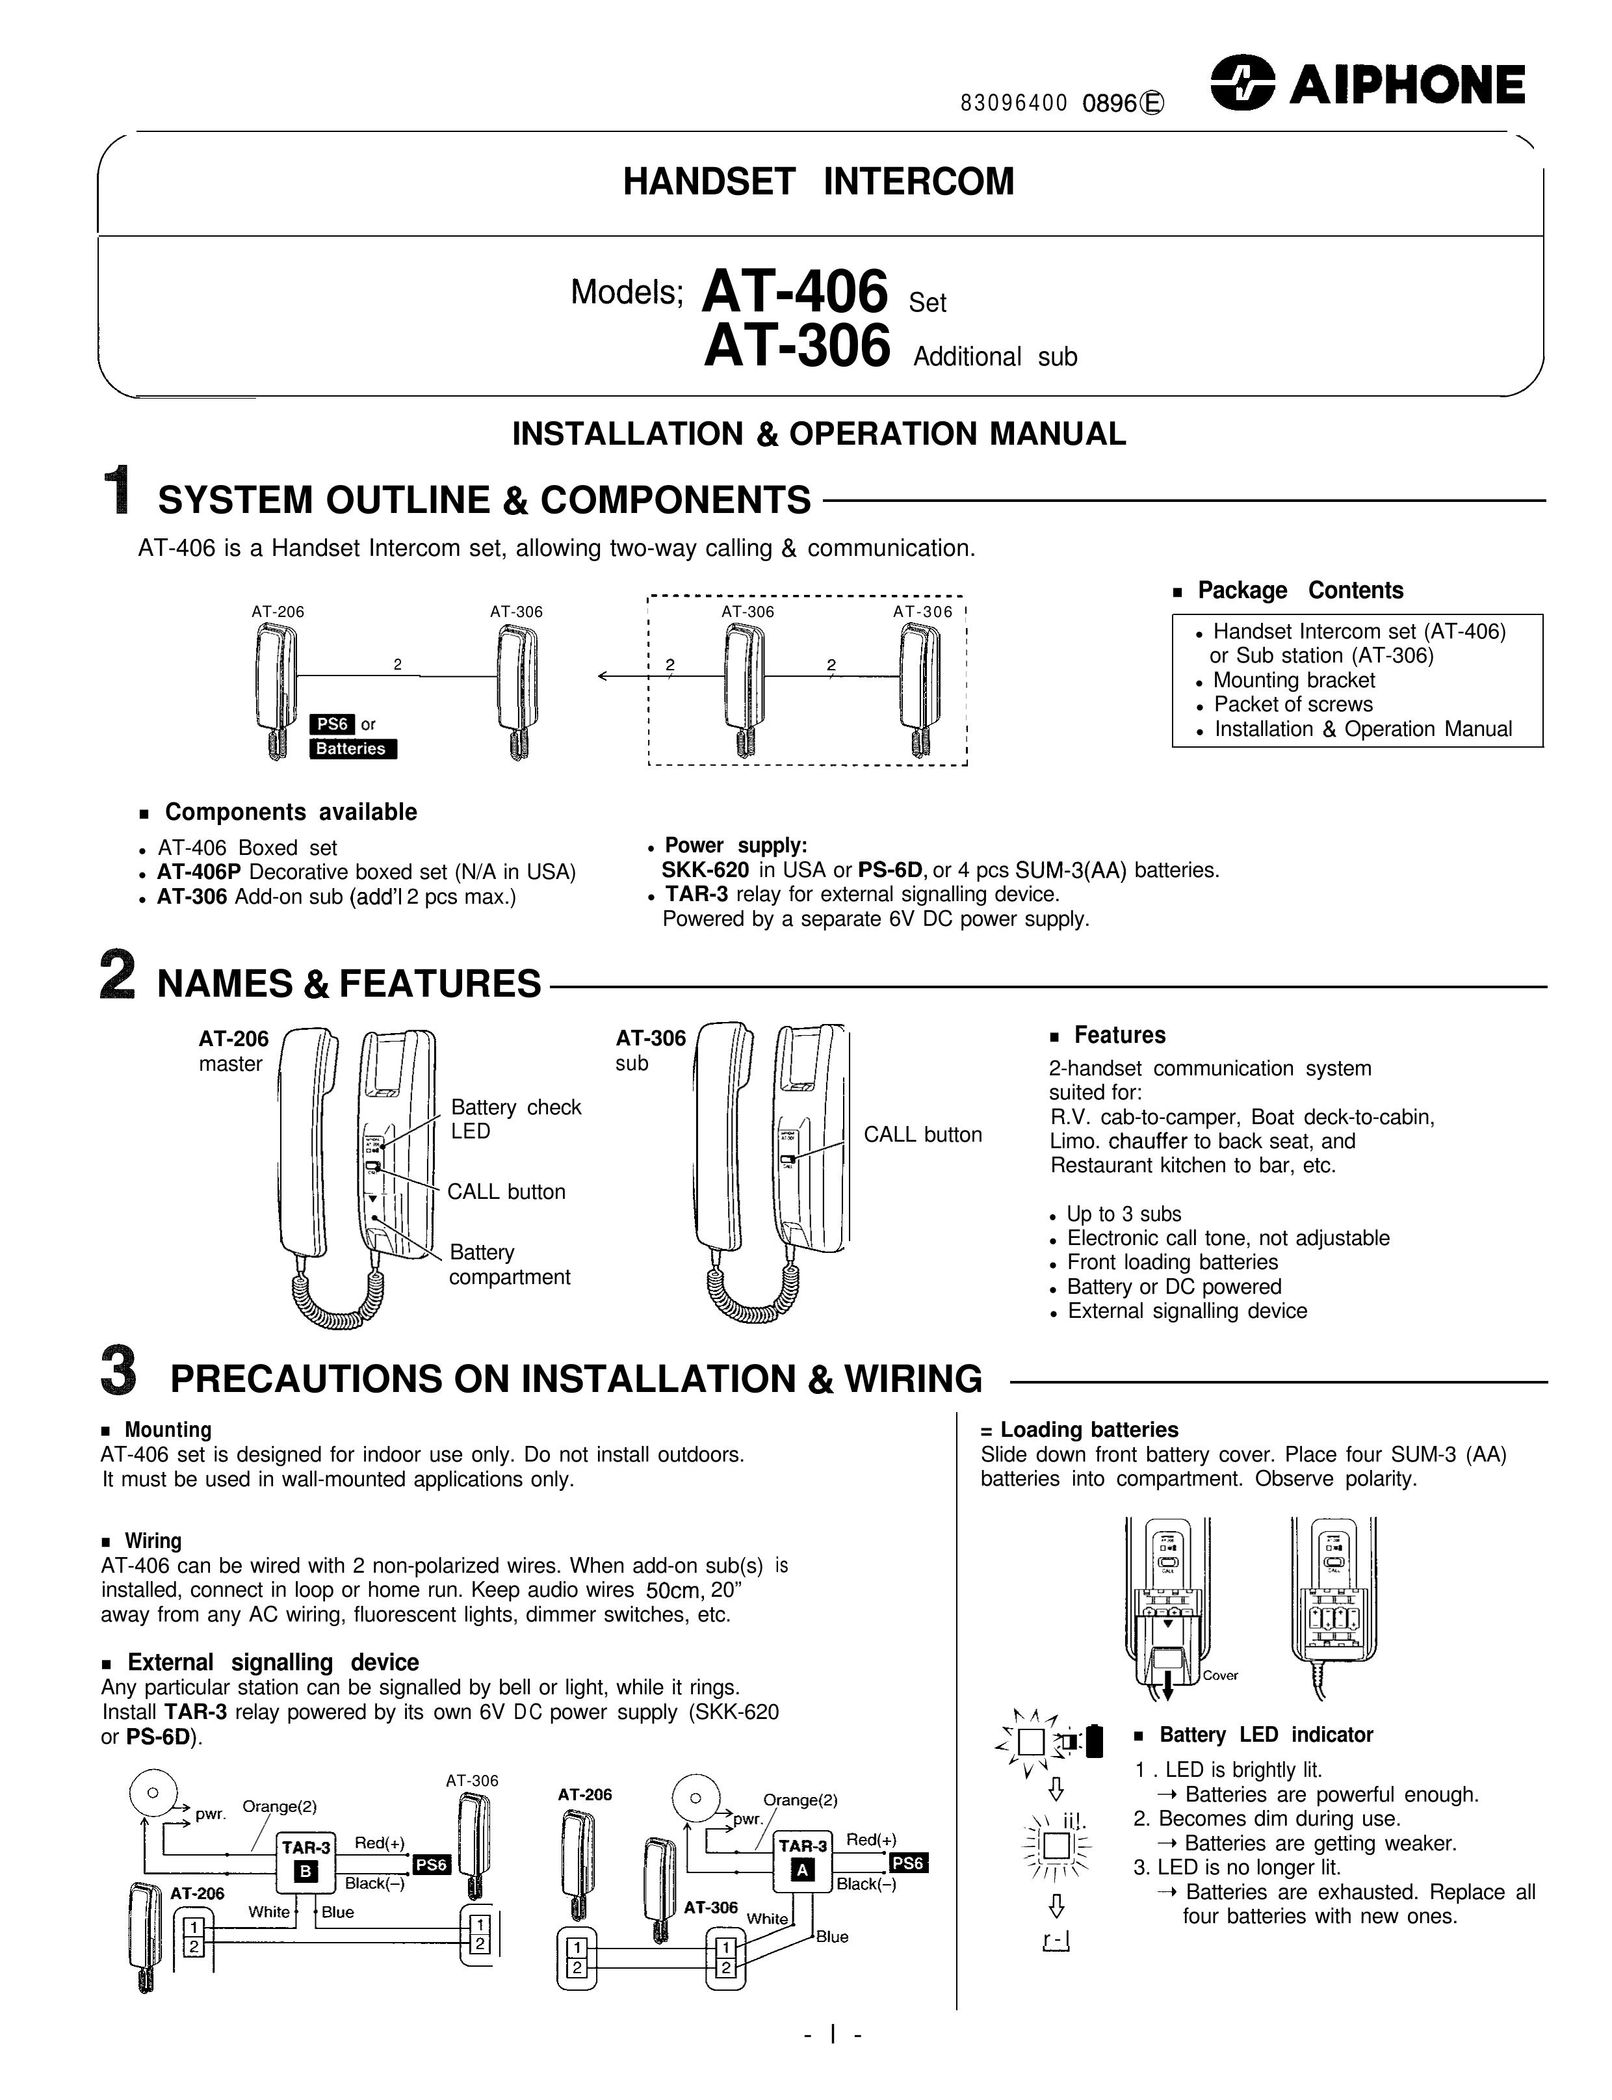 Aiphone AT-406 Intercom System User Manual